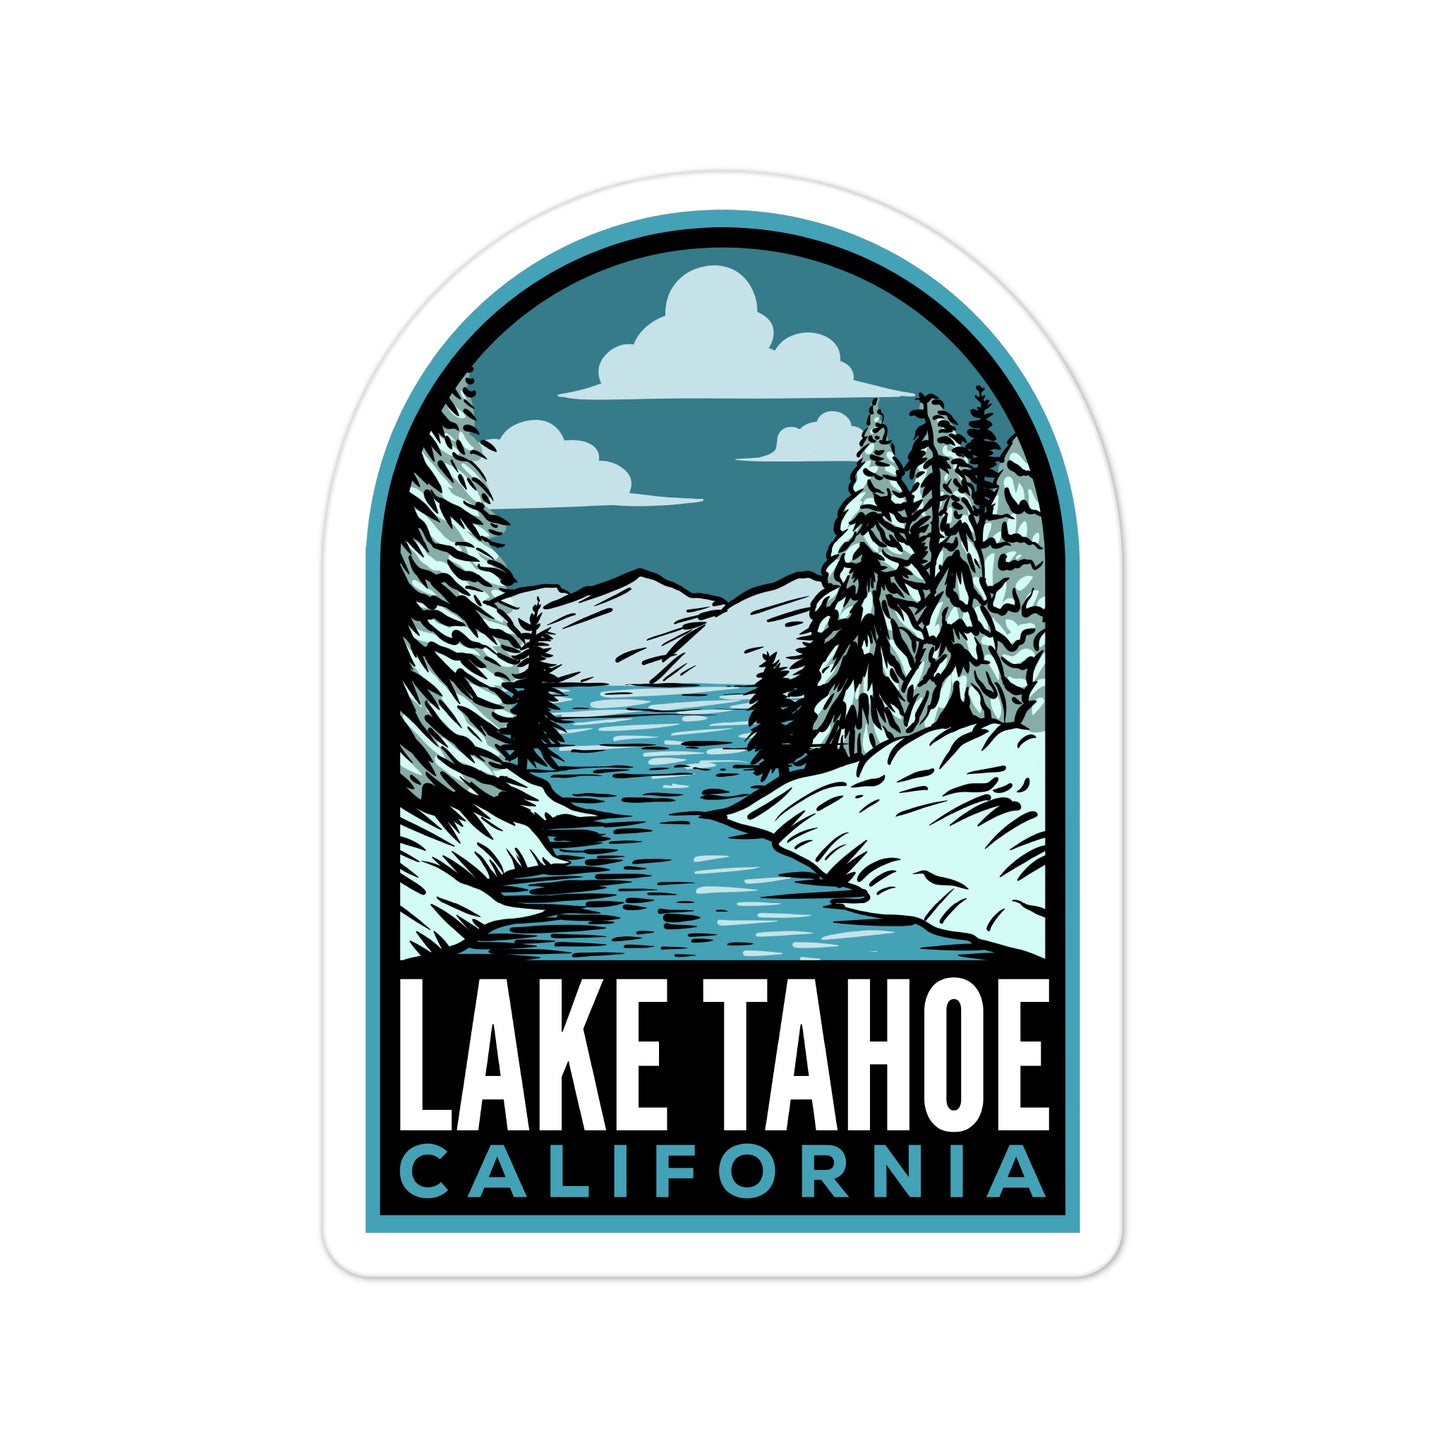 A sticker of Lake Tahoe